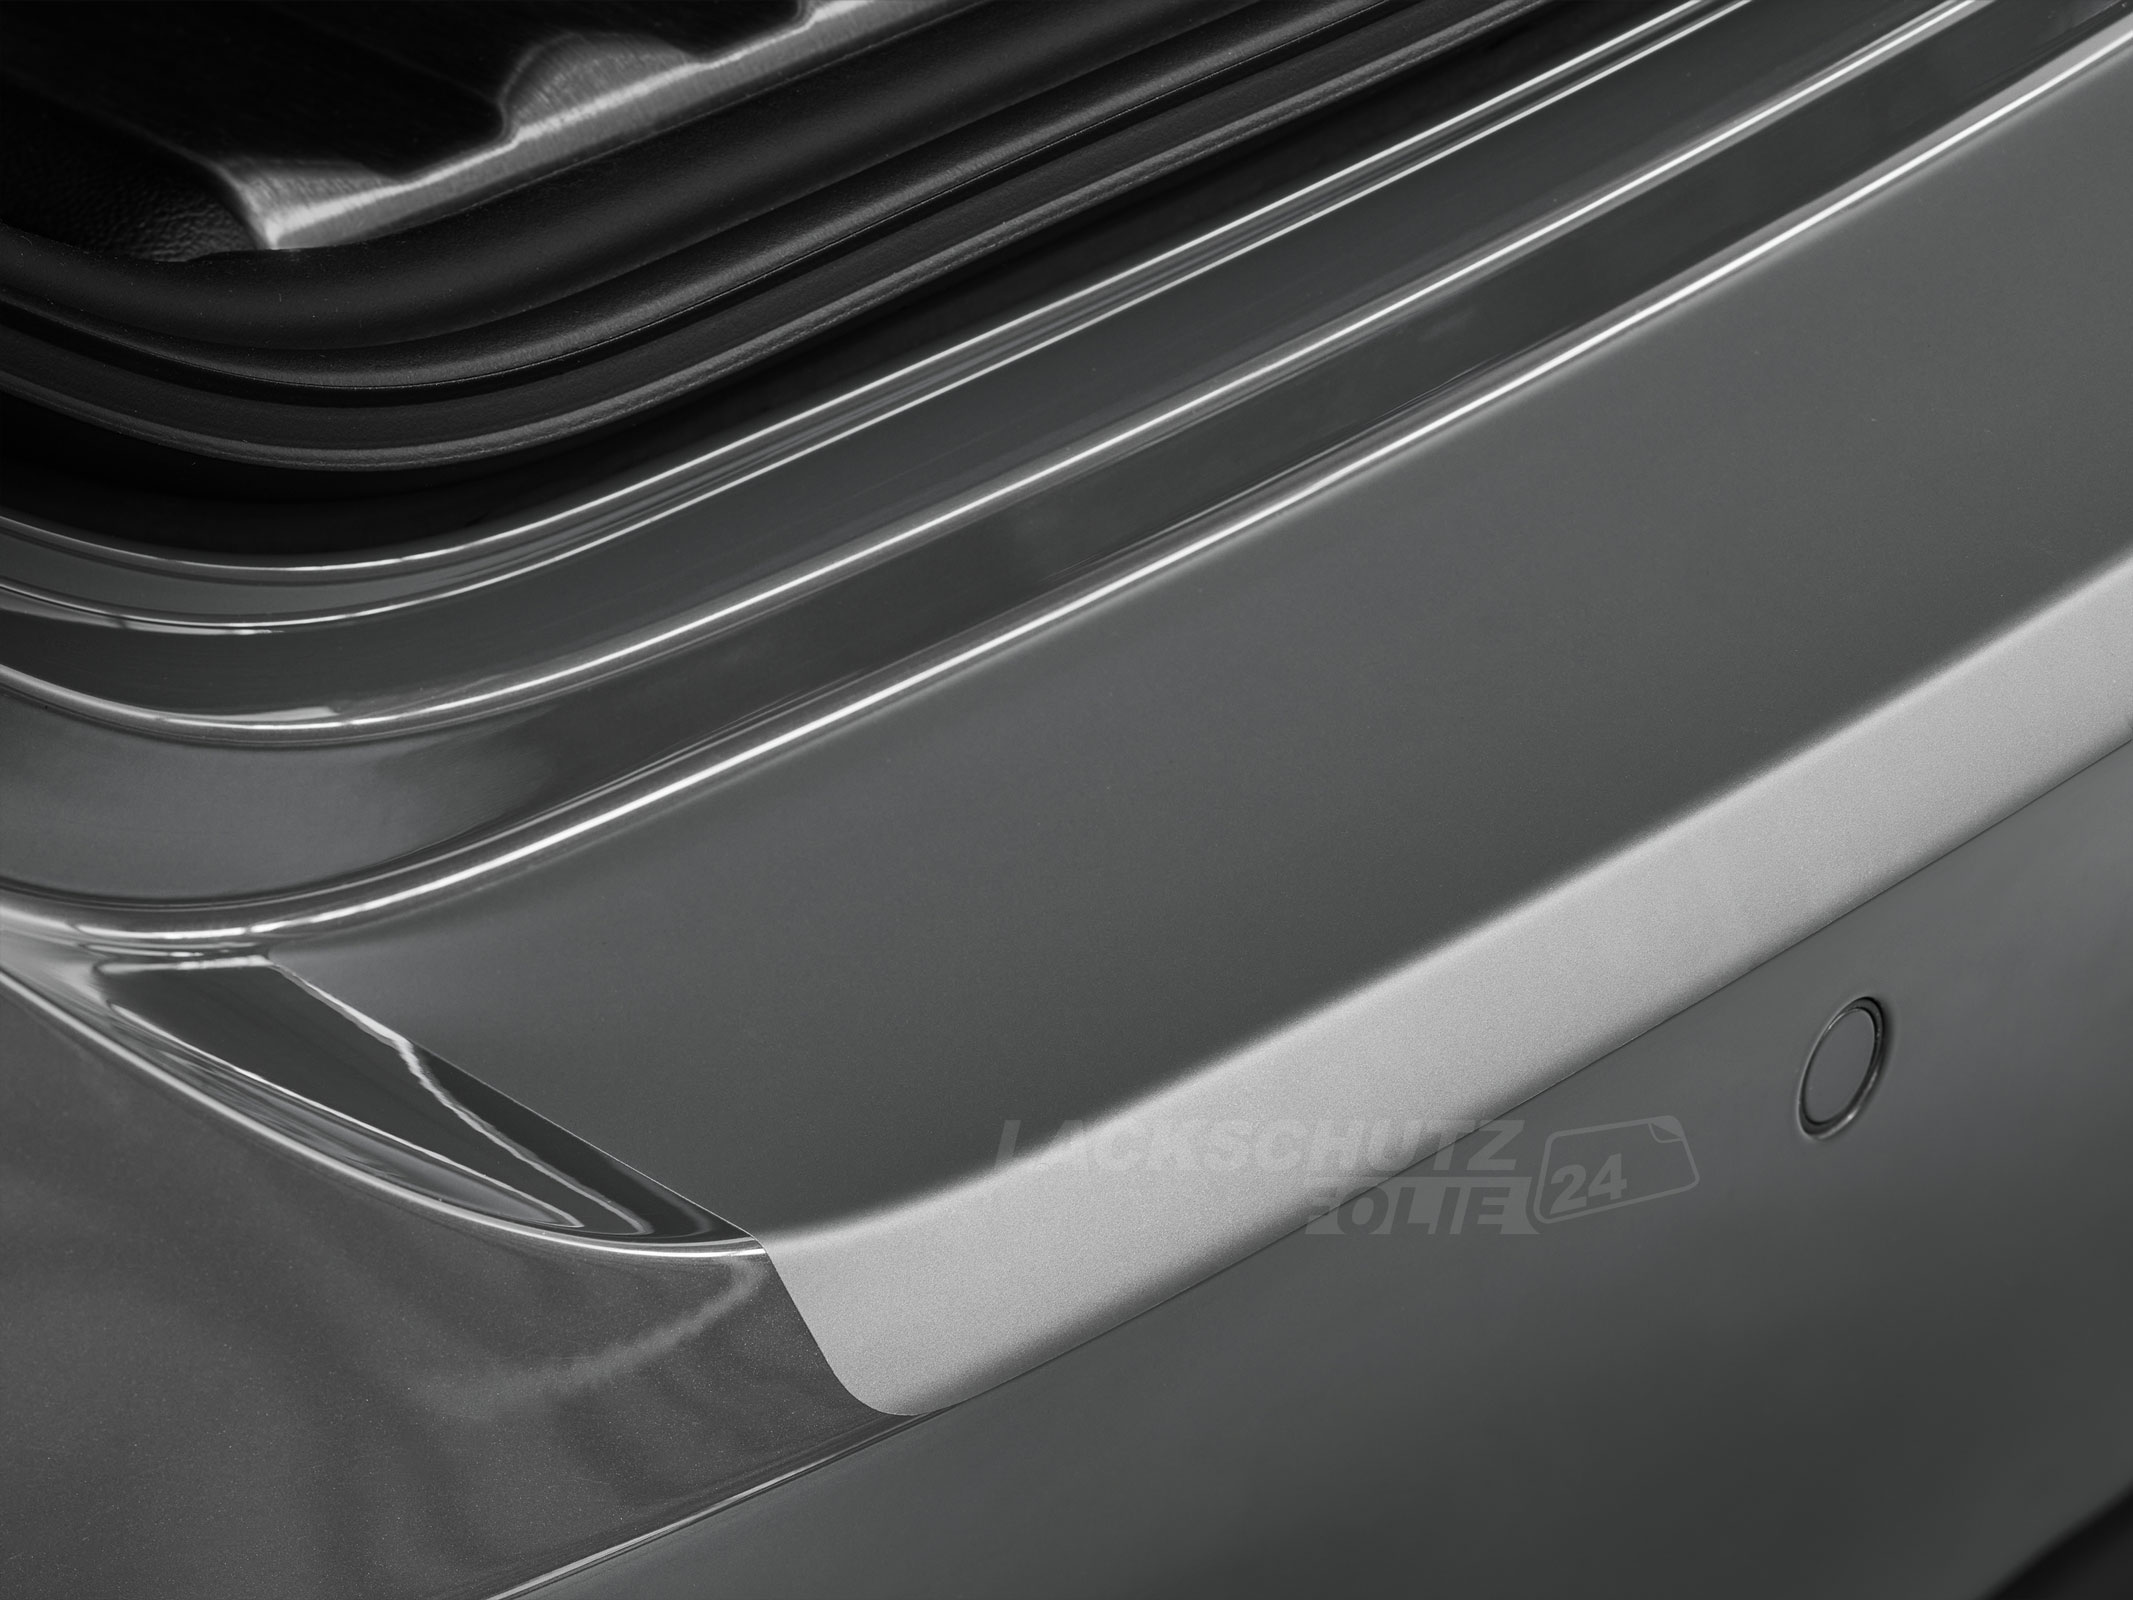 Ladekantenschutzfolie - Transparent Glatt MATT 110 µm stark  für Ford Focus Schrägheck (III) Facelift, Typ C346, BJ 2014-09/2018